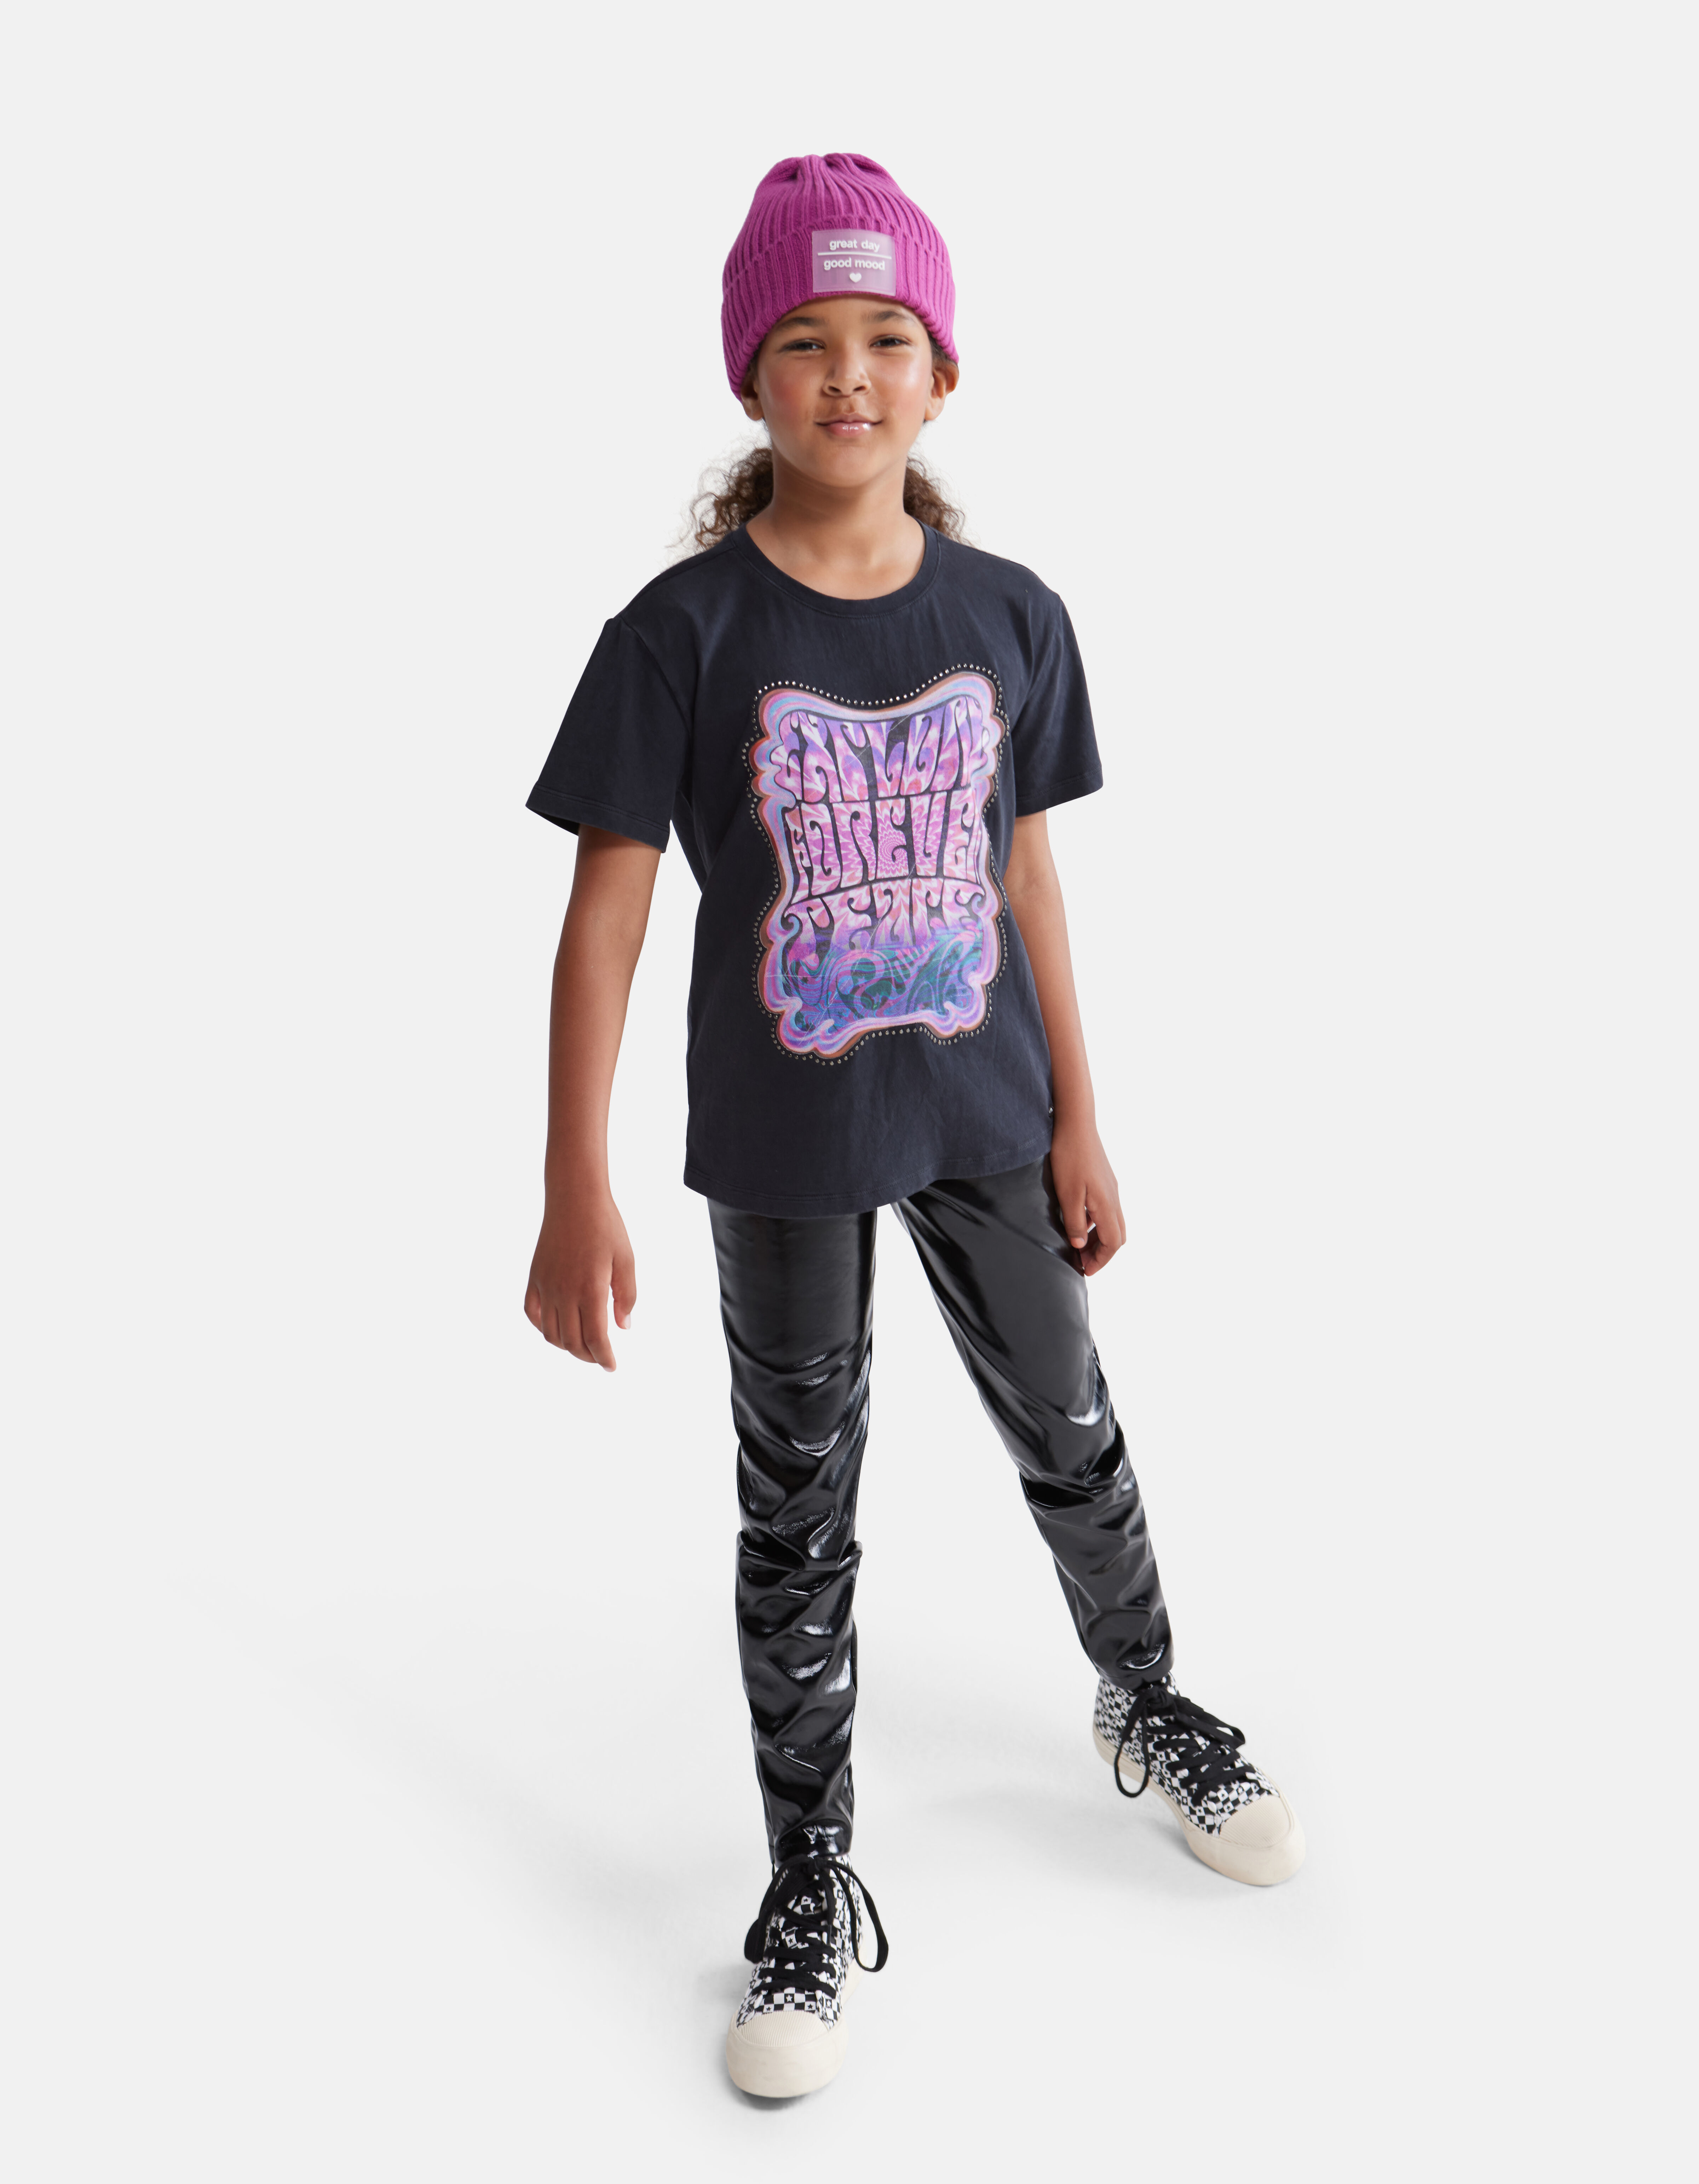 Kleding Meisjeskleding Tops & T-shirts Blouses Jaren 90 Kidcore Meisjes Blouse met levendige nieuwigheid Print 